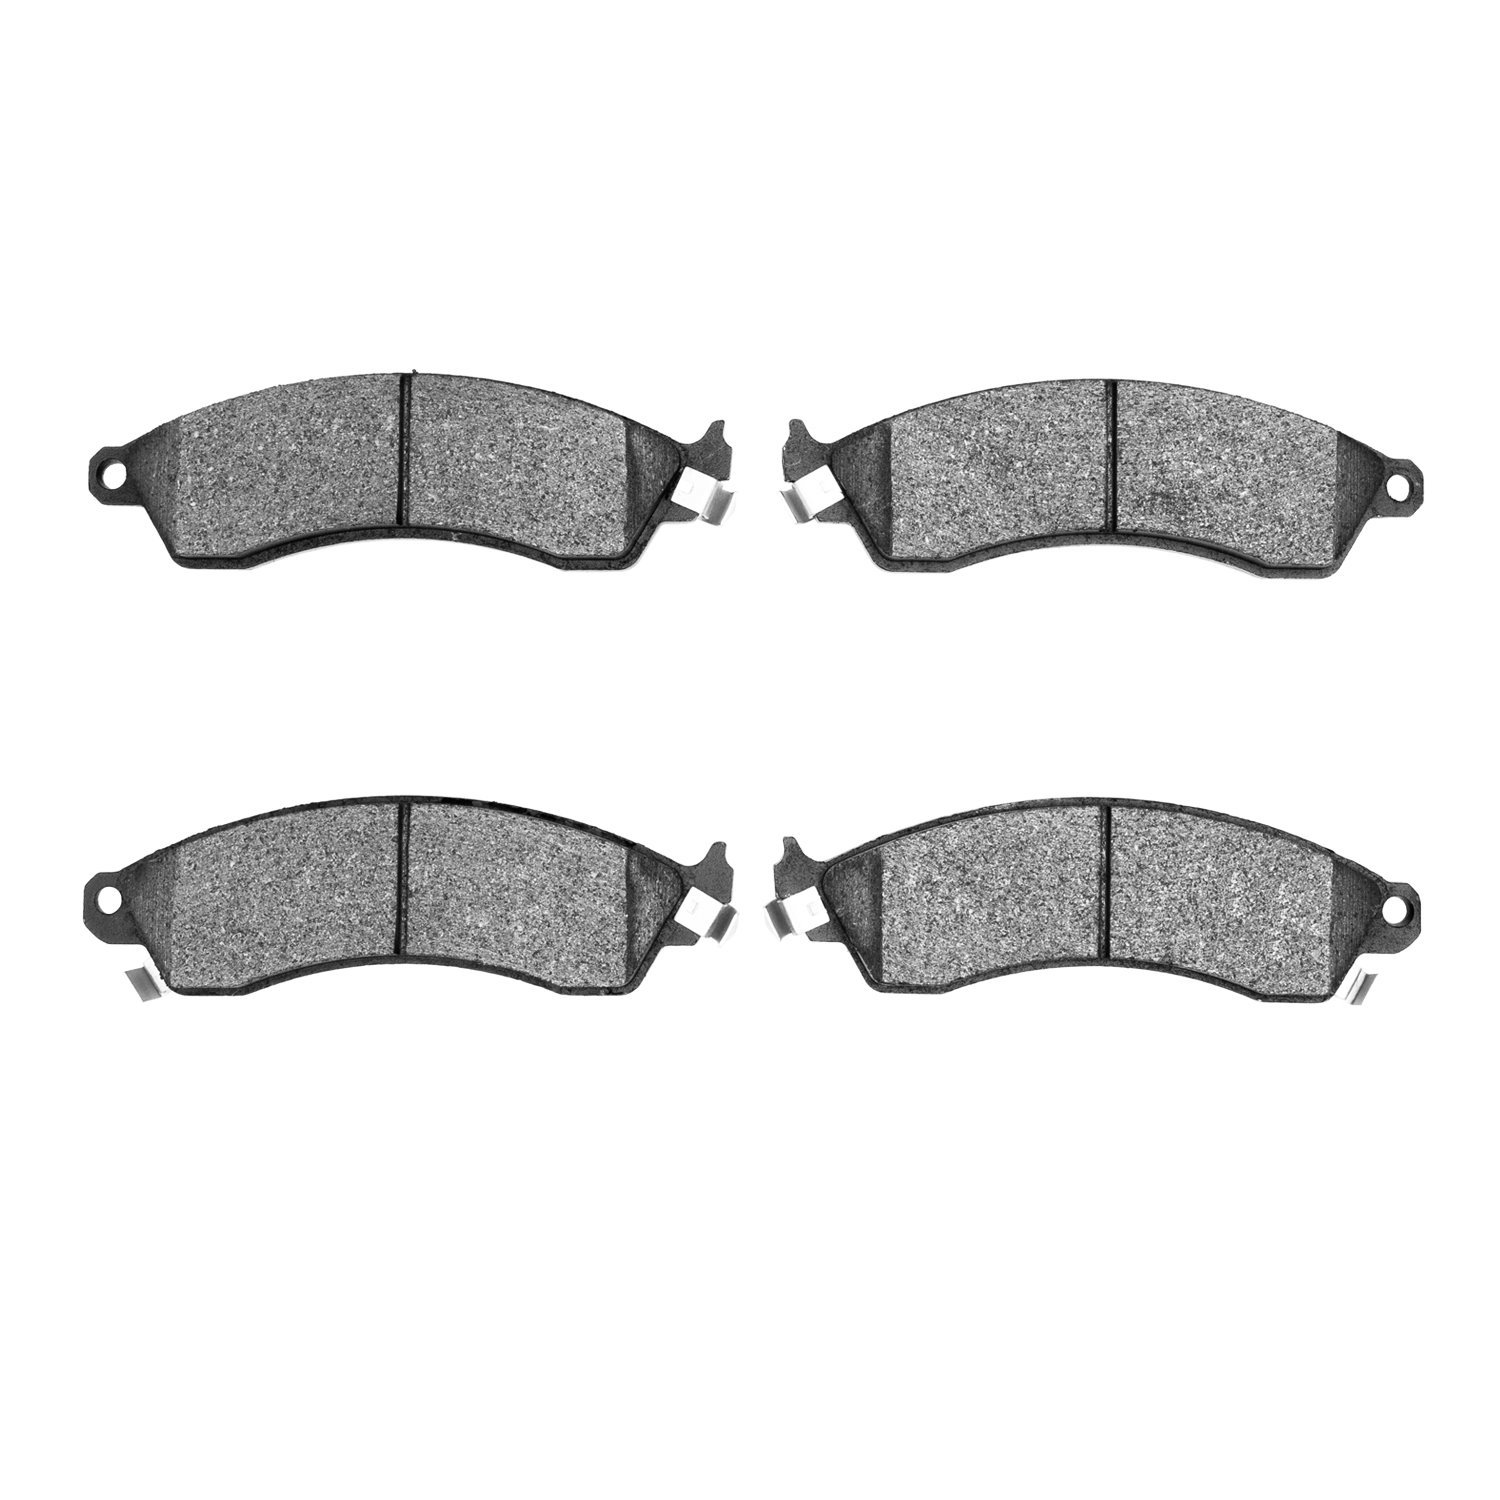 Semi-Metallic Brake Pads, 1985-2004 Fits Multiple Makes/Models, Position: Front